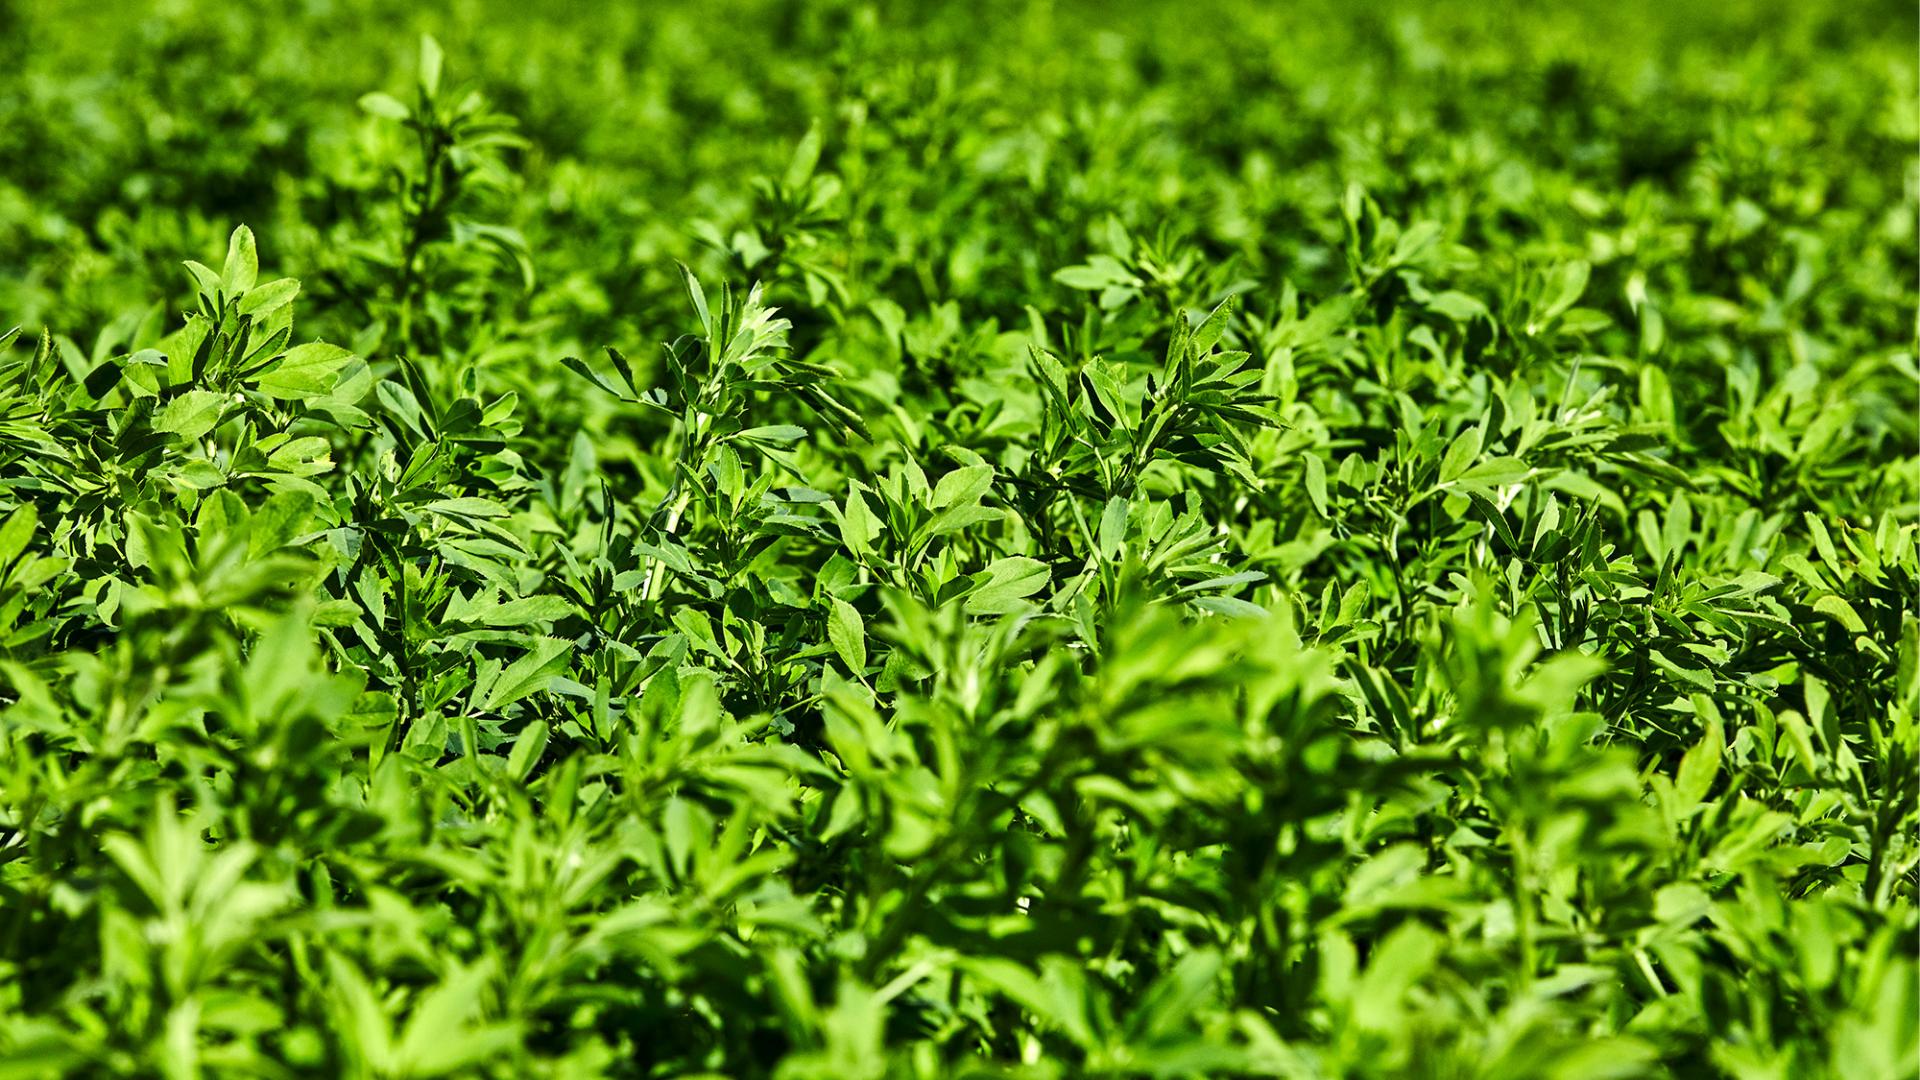 Increase farm profitability with DLF alfalfa